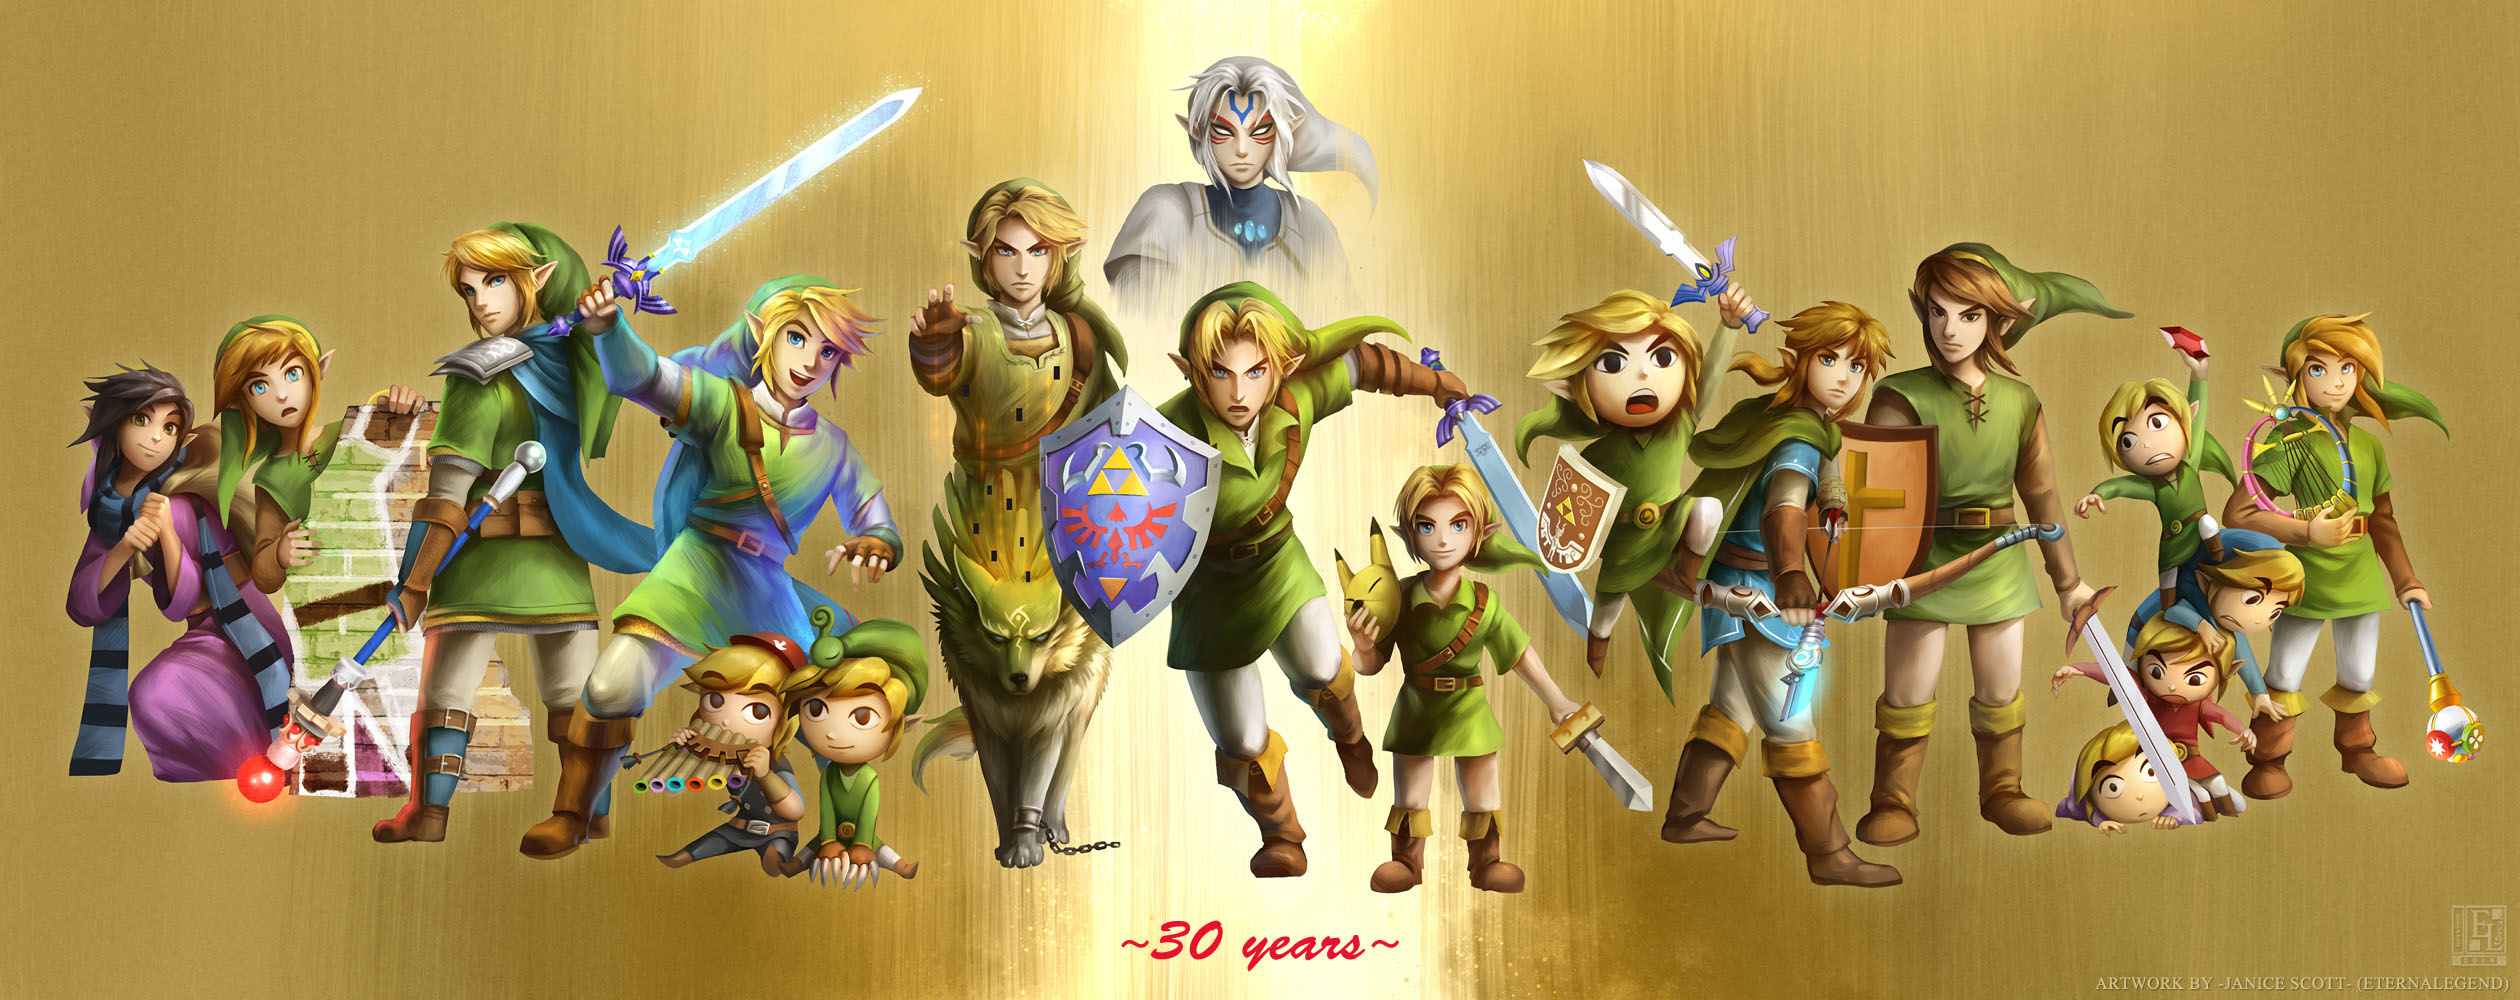 30th Anniversary of Legend of Zelda - Evolution of Link by EternaLegend